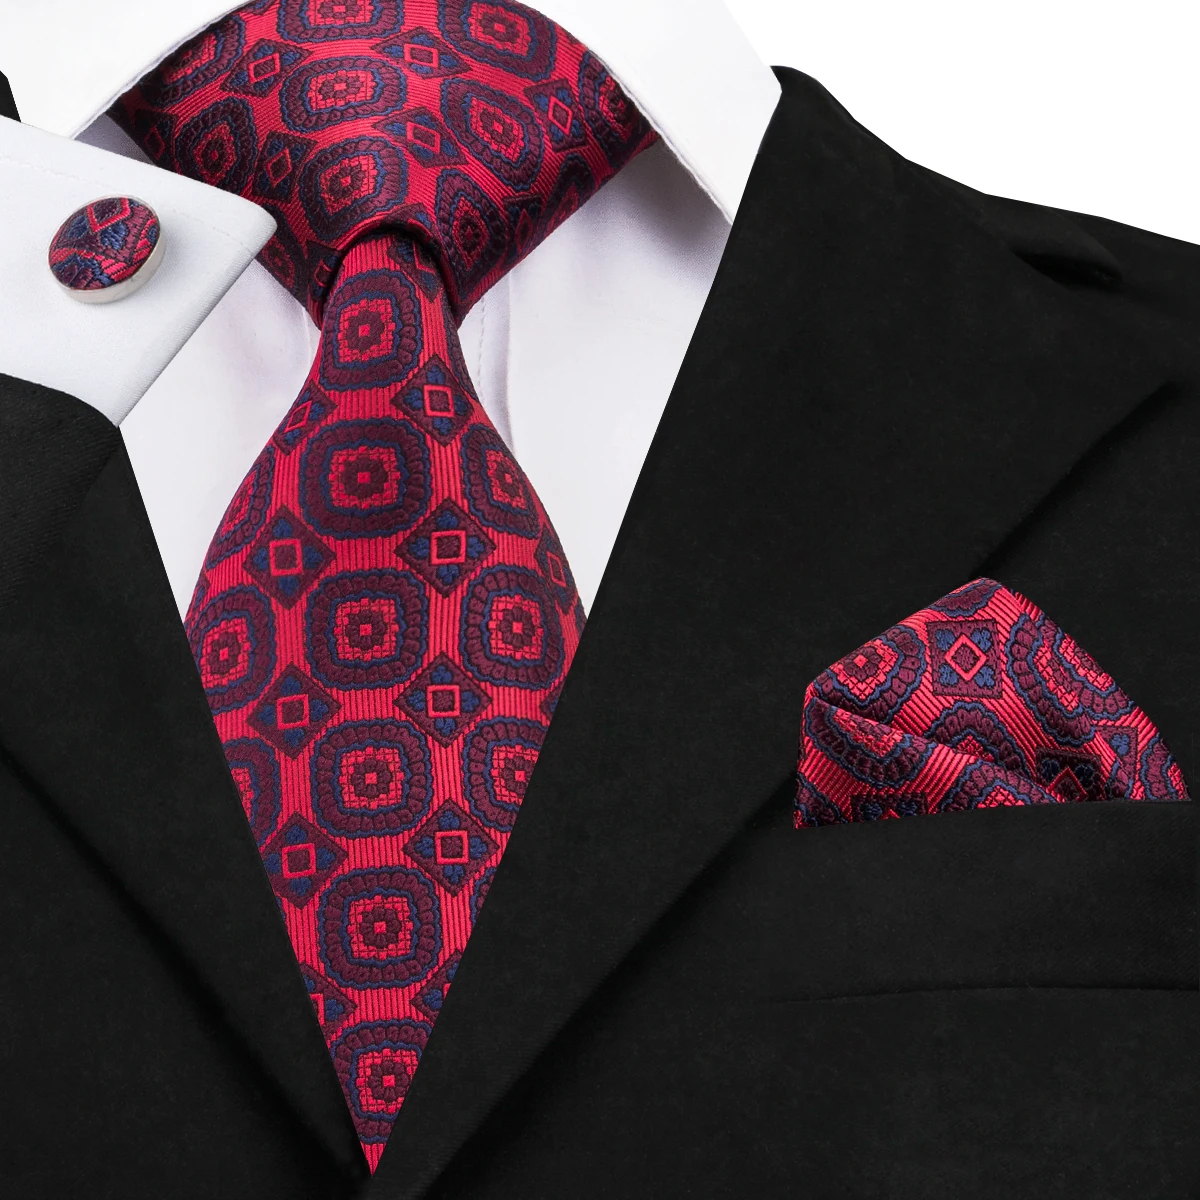 Aliexpress.com : Buy C 1461 Hi Tie Fashion Mens Ties Brand Designer Red ...